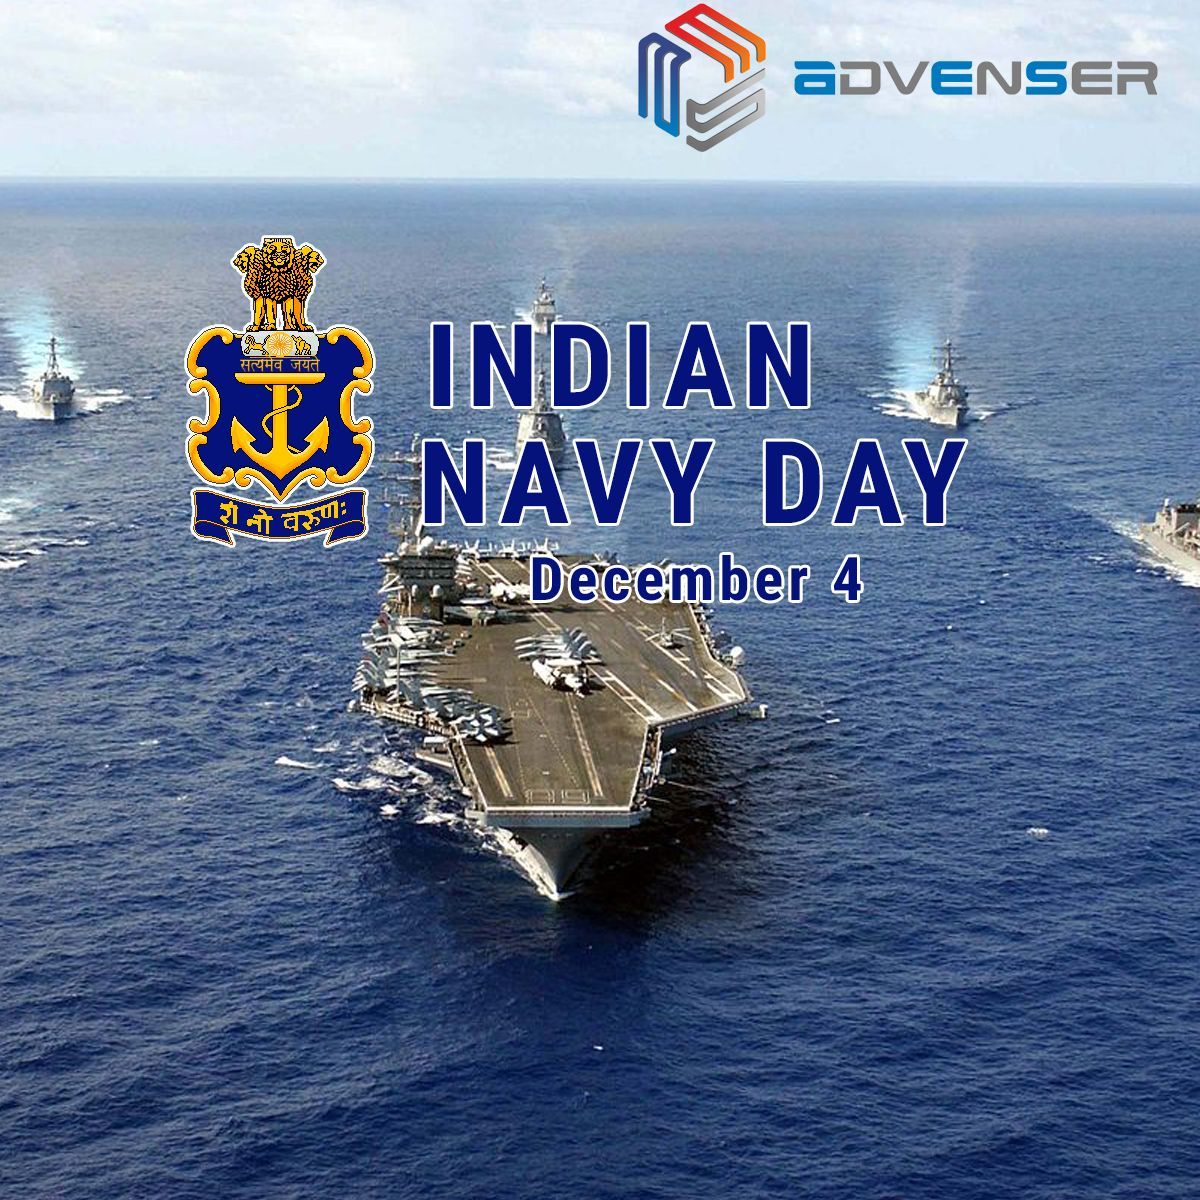 Indian Navy Day. Navy day, Indian navy day, Indian navy